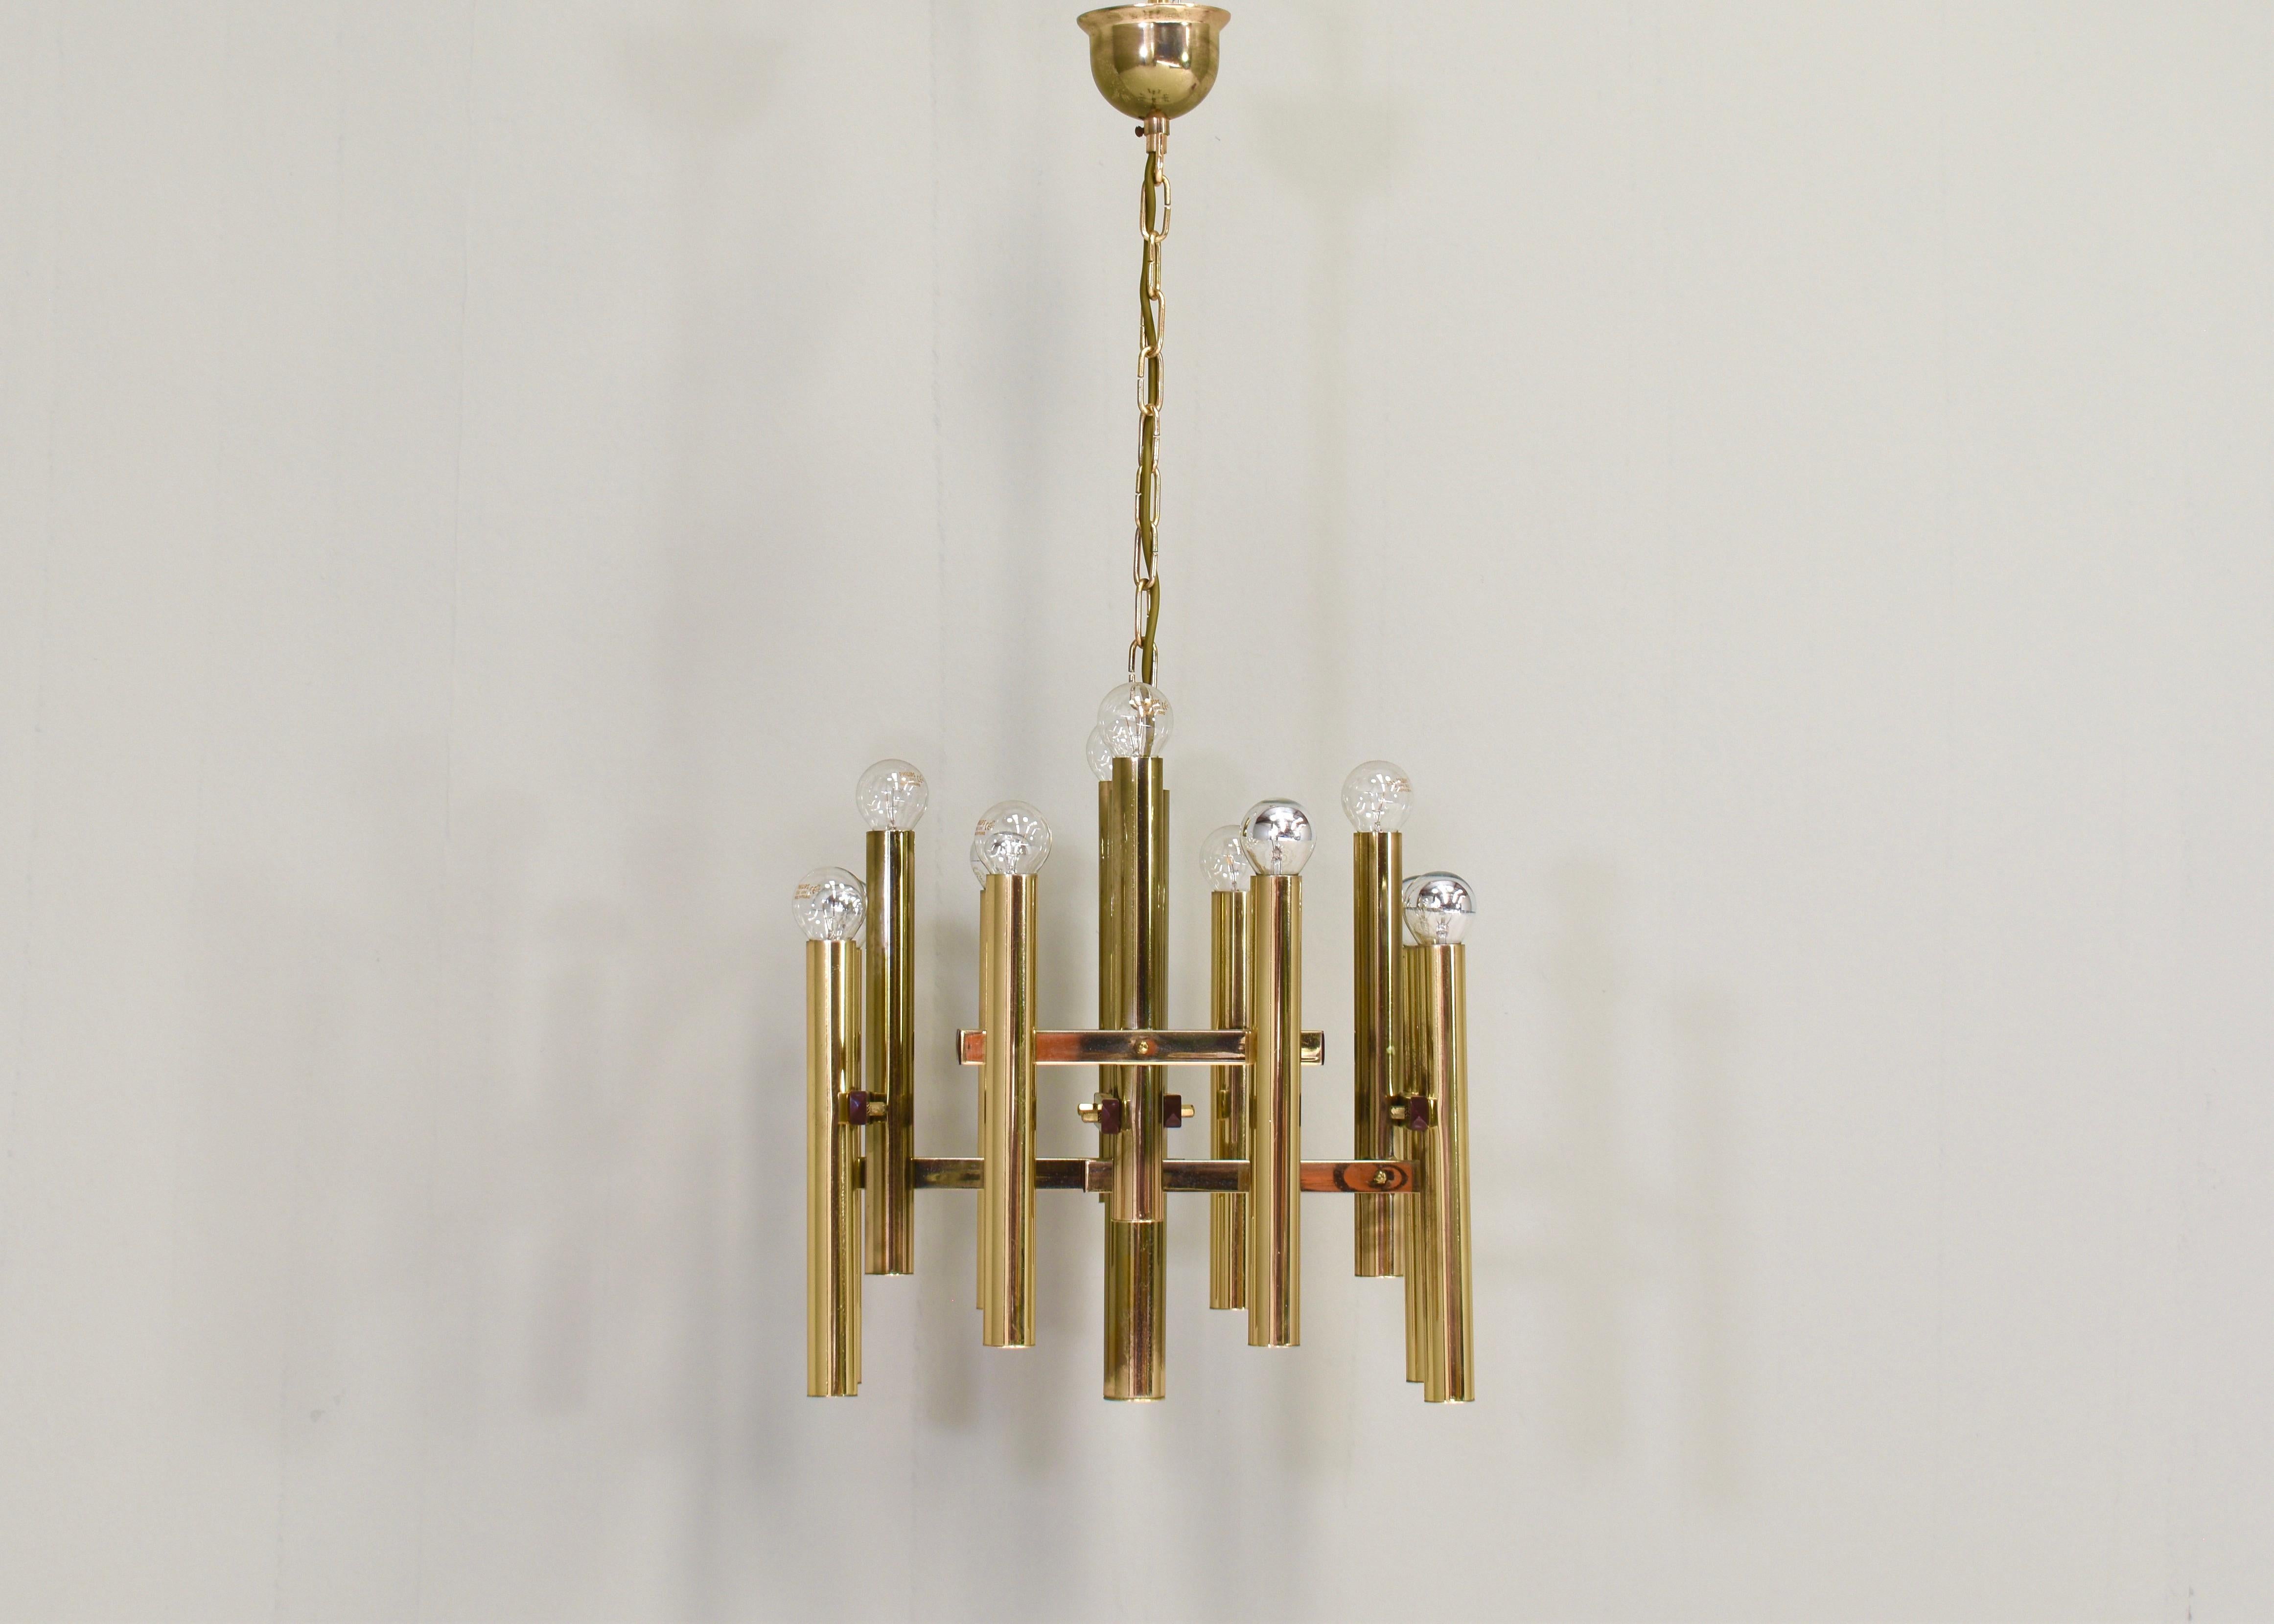 Brass 12 scone pendant lamp / chandelier by Gaetano Sciolari for Sciolari Lighting, Italy - circa 1970.
 